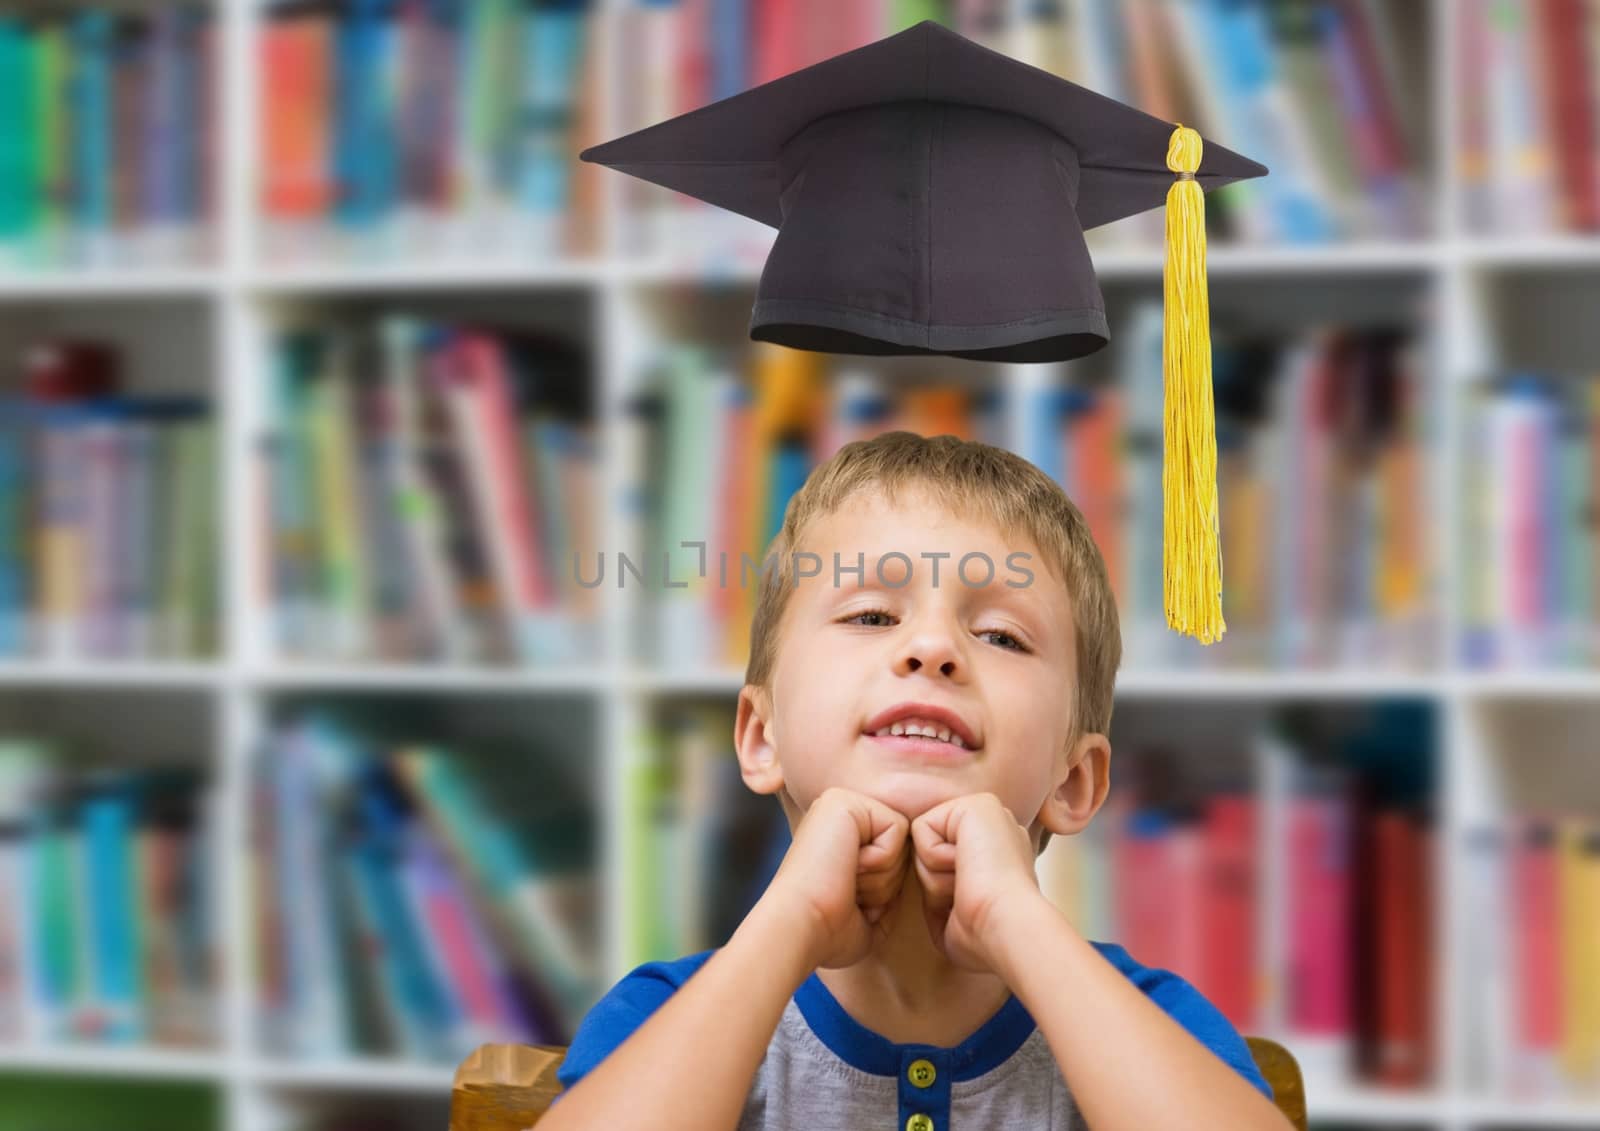 School boy in education library with graduation hat by Wavebreakmedia